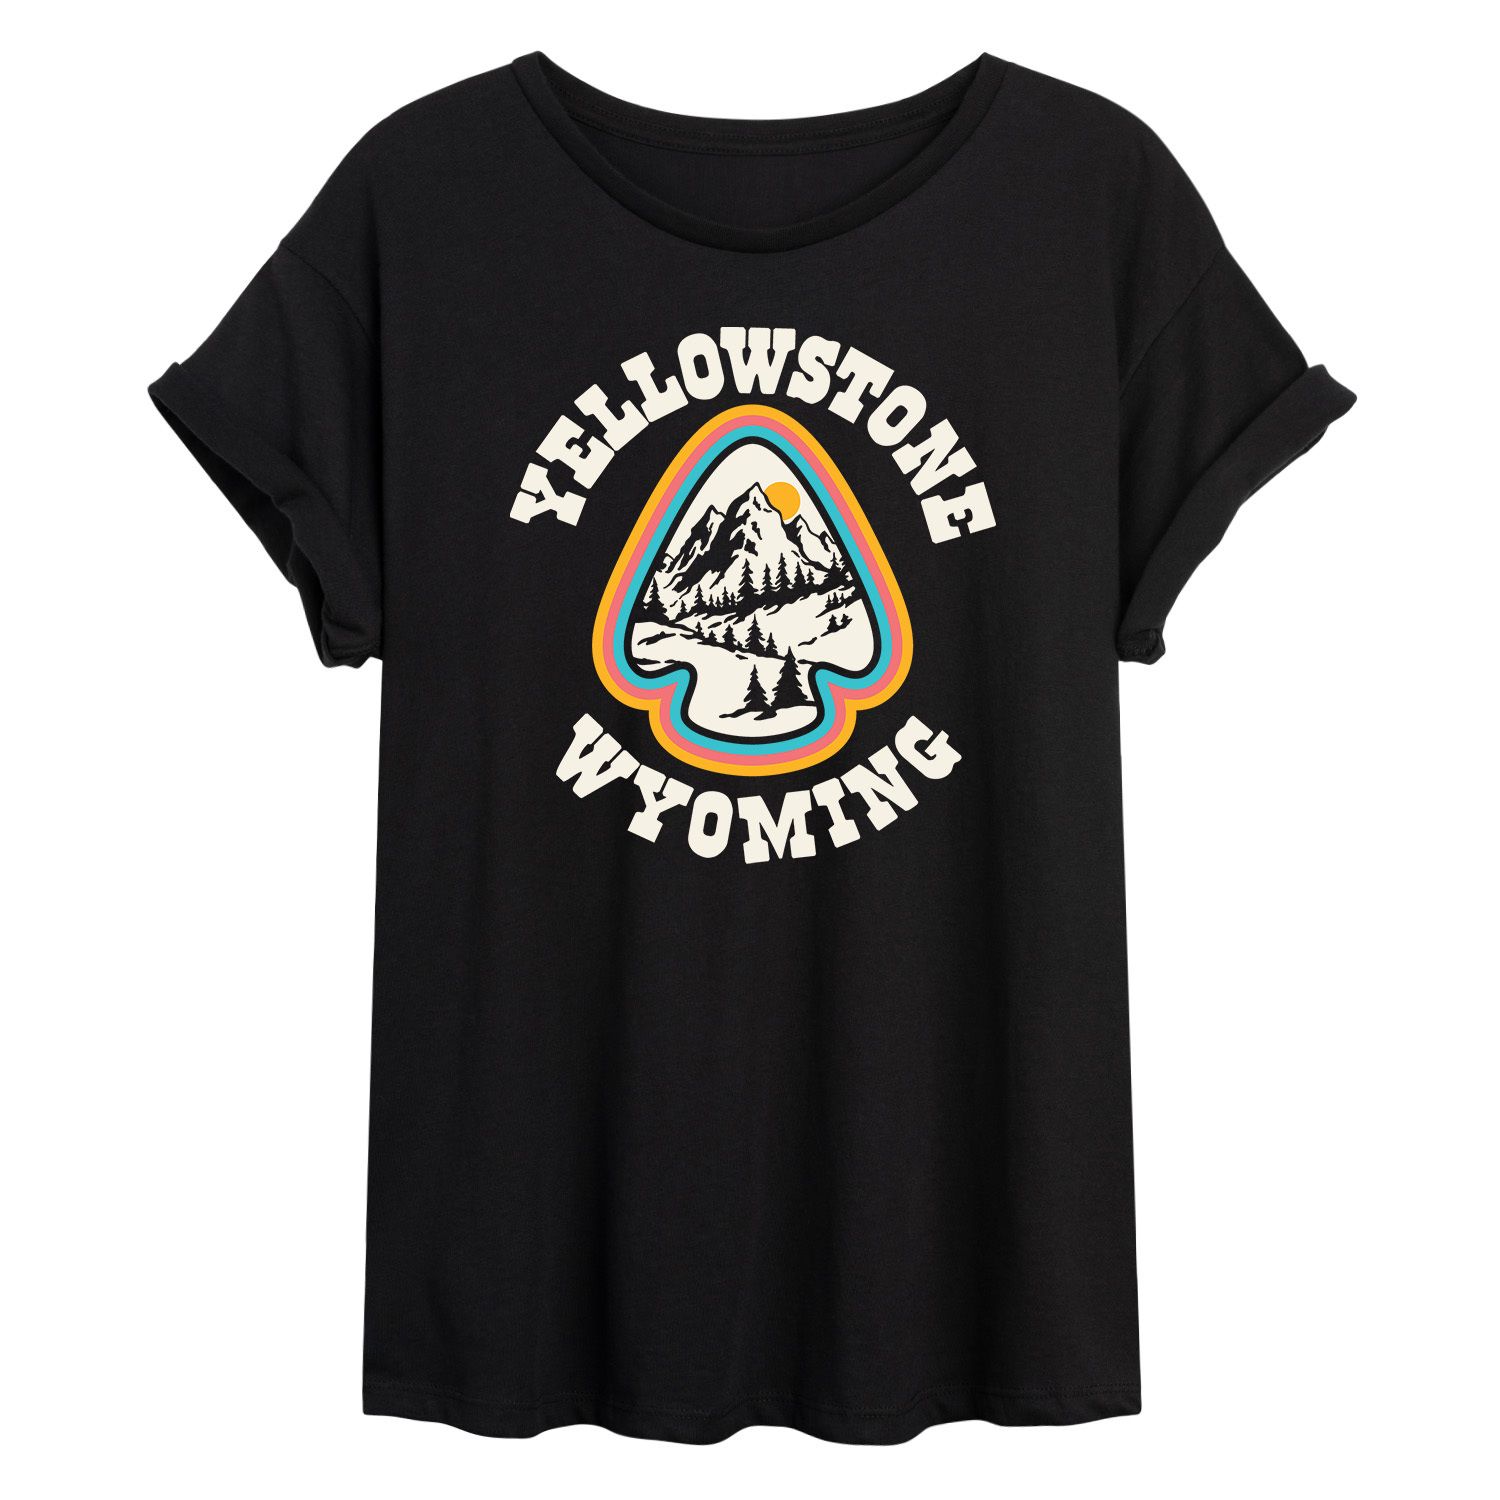 Размерная футболка с рисунком Yellowstone Wyoming для юниоров Licensed Character